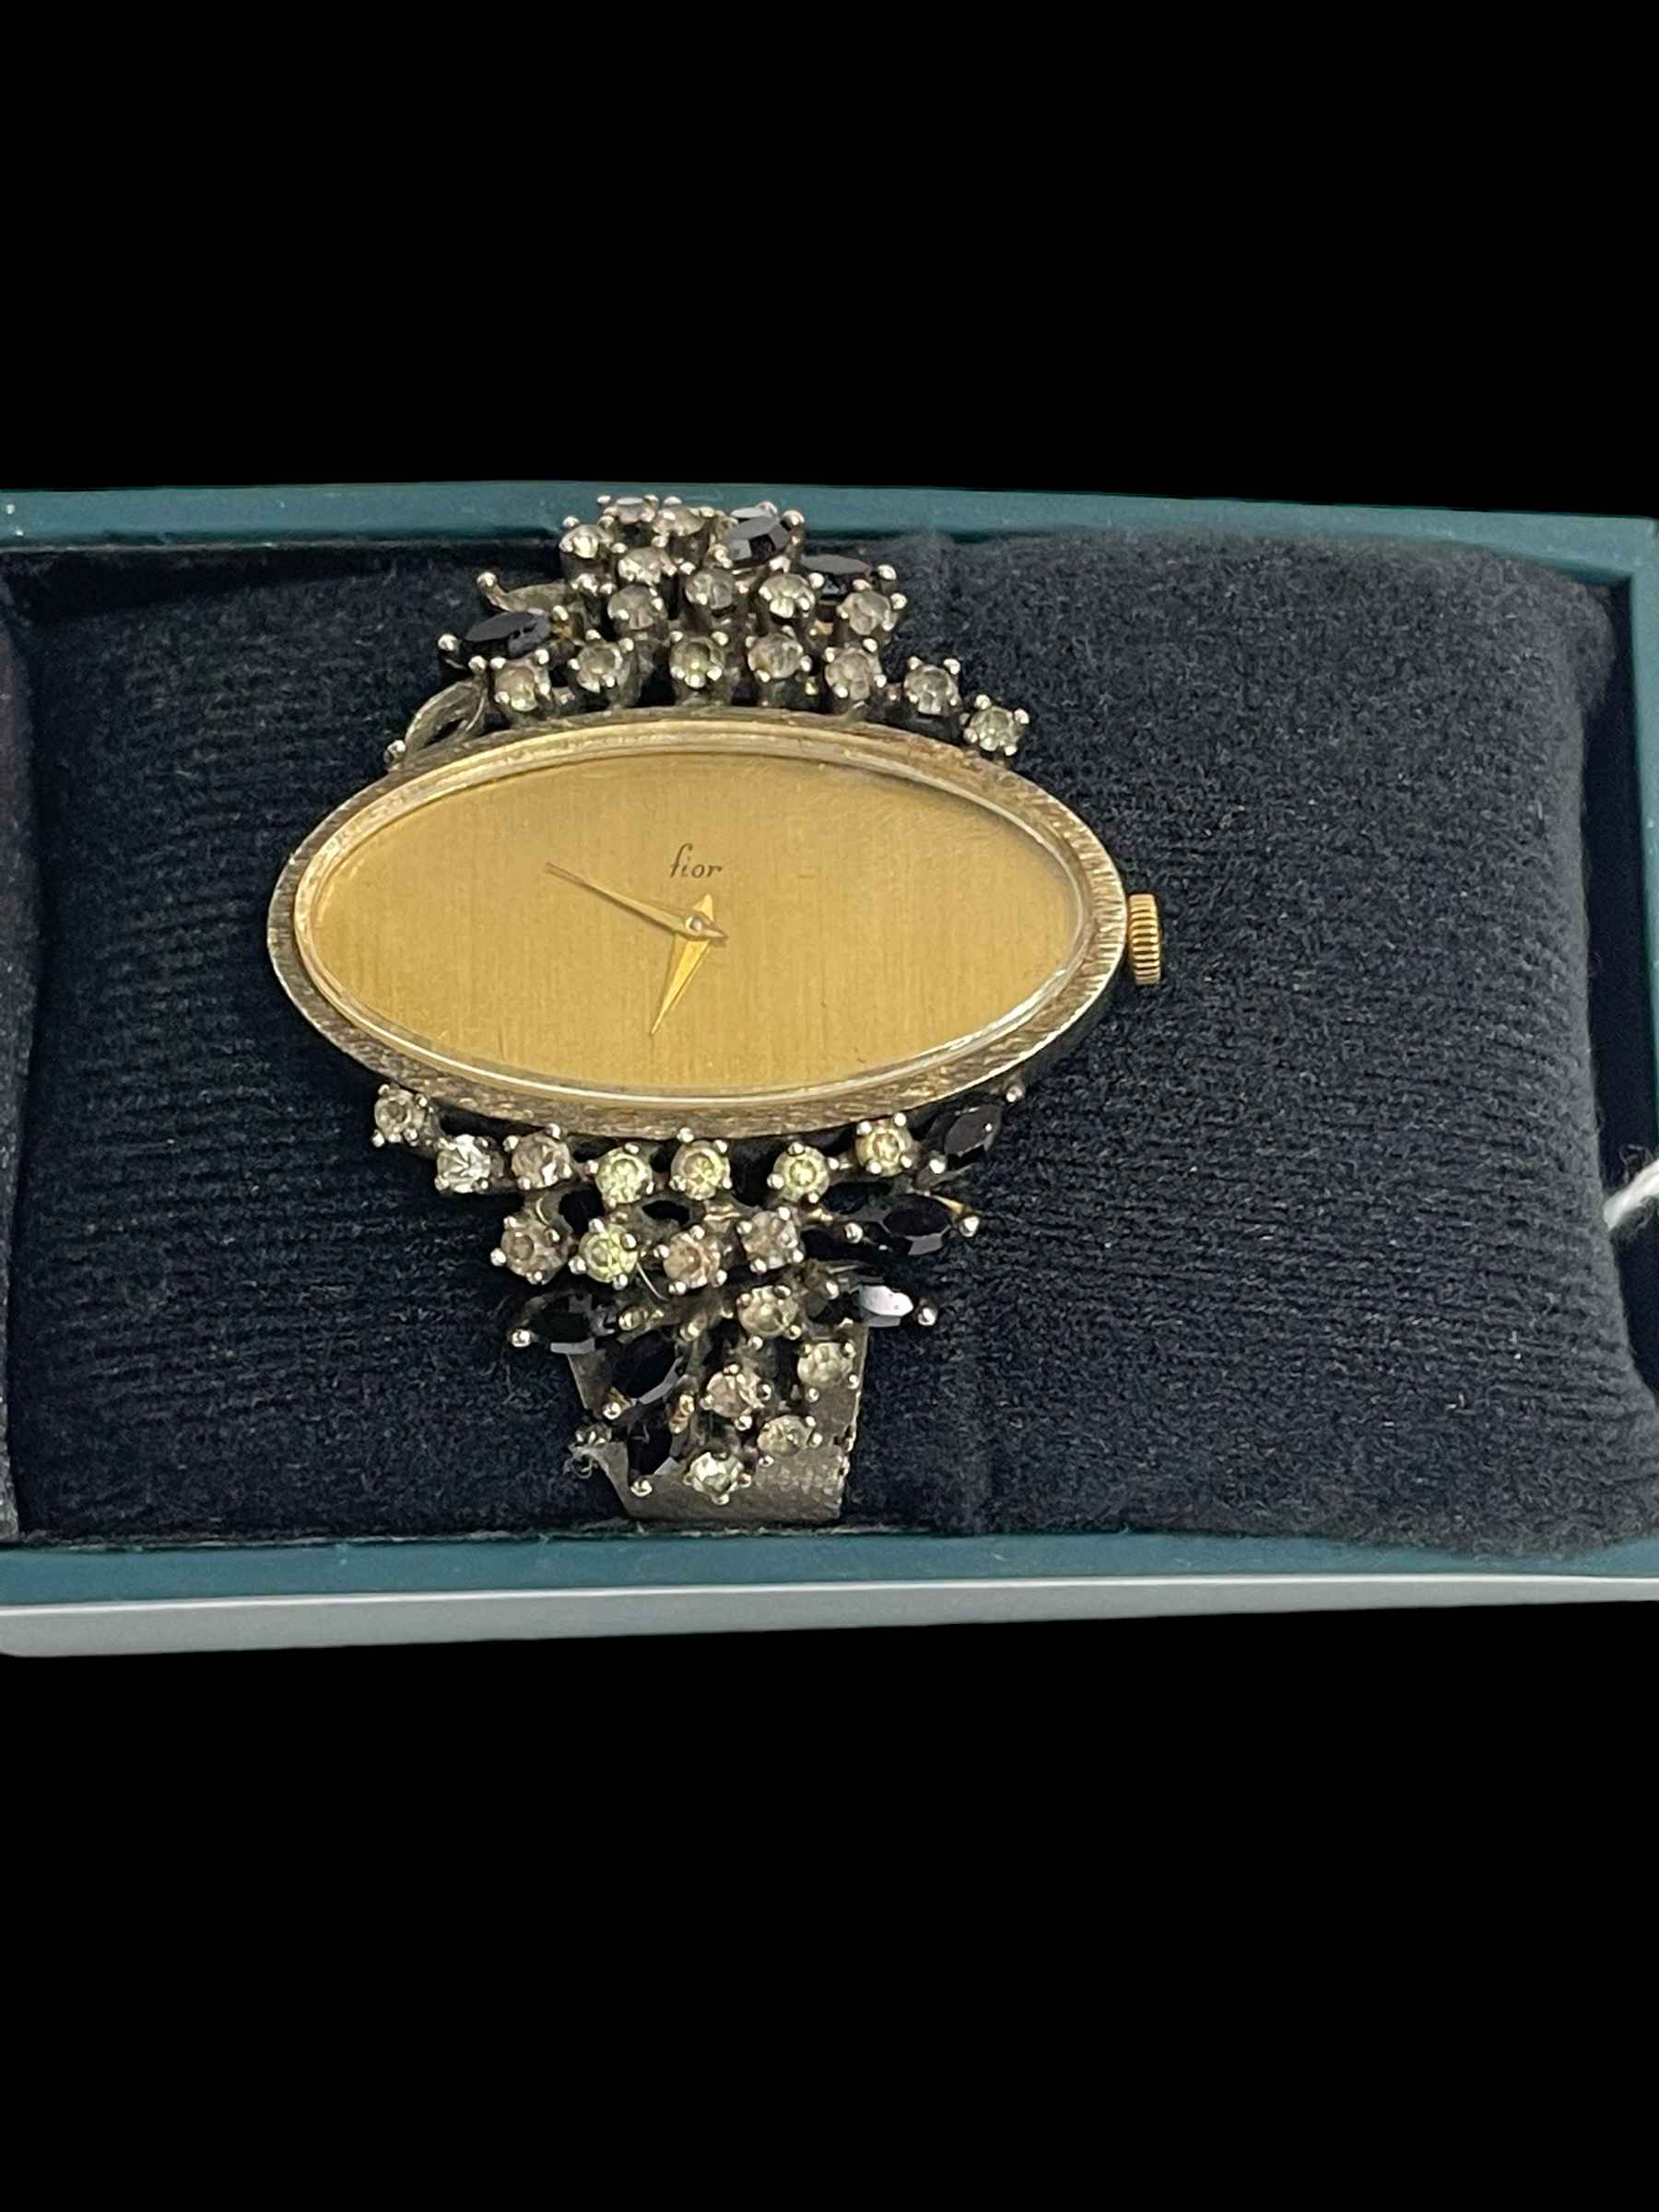 Ladies Fior gem set silver bracelet watch.